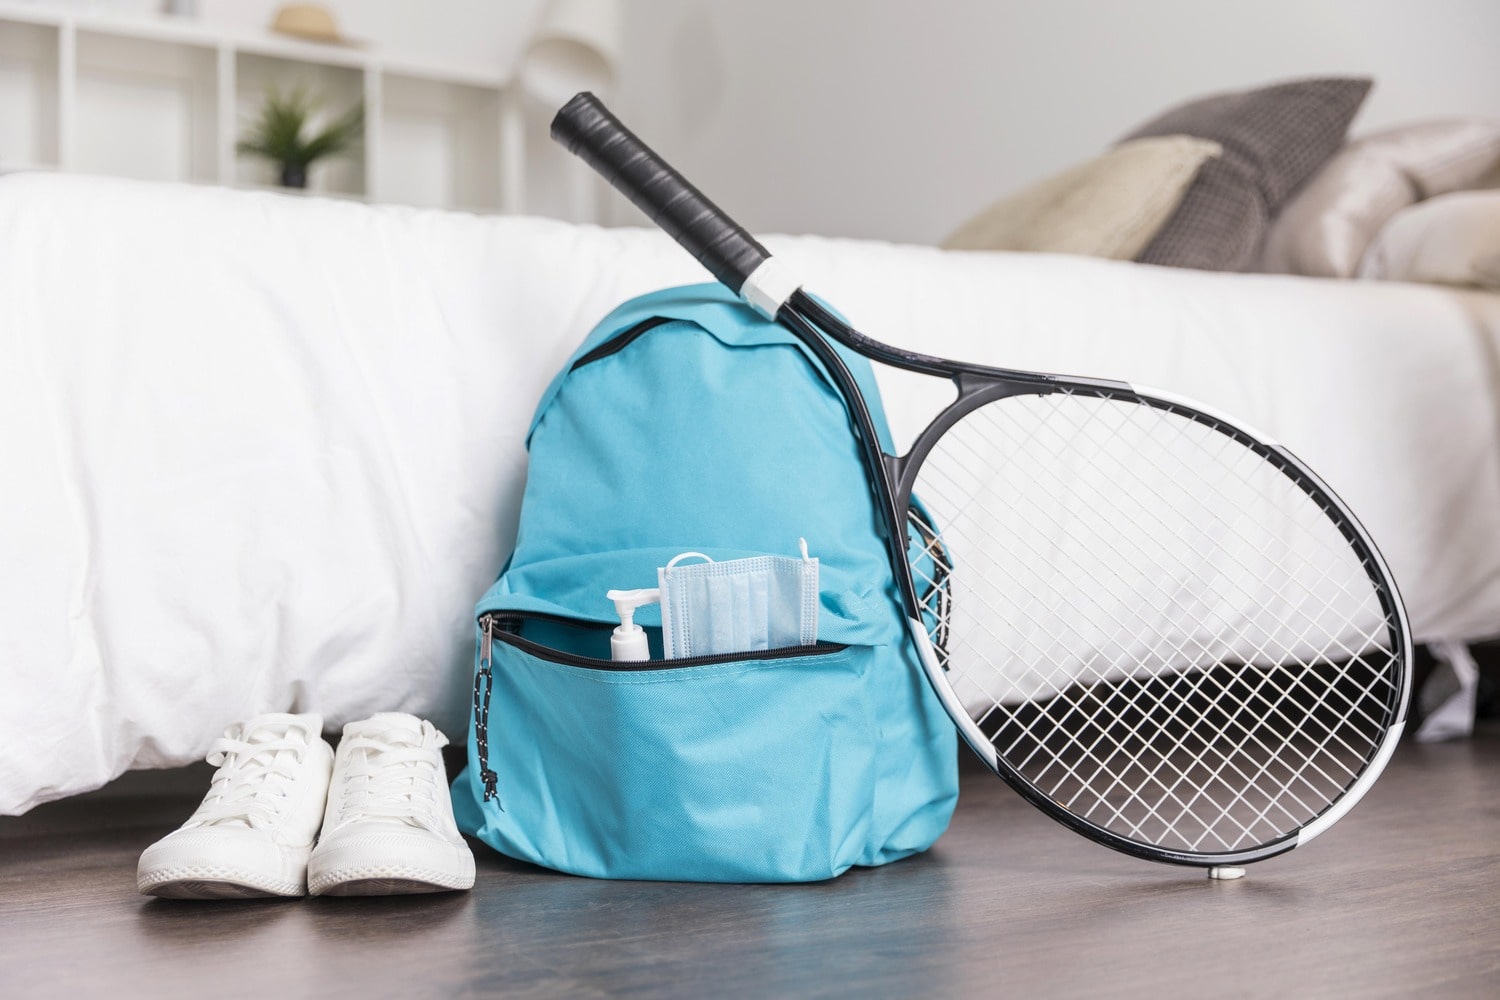  Tennis Racket Bag